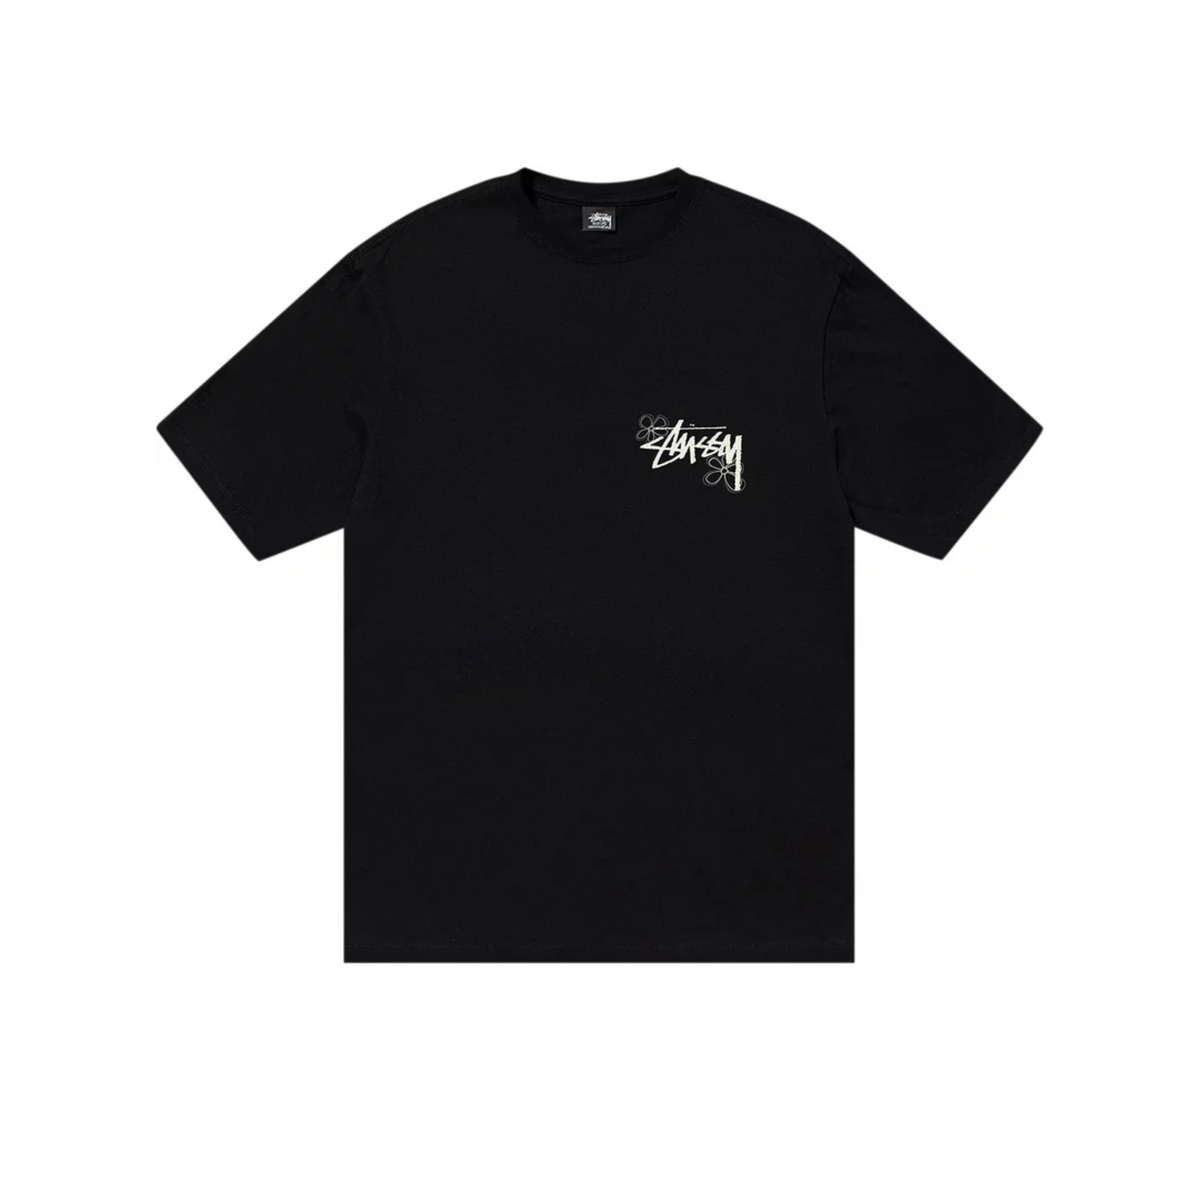 Stüssy Summer LB T-shirt "Black"